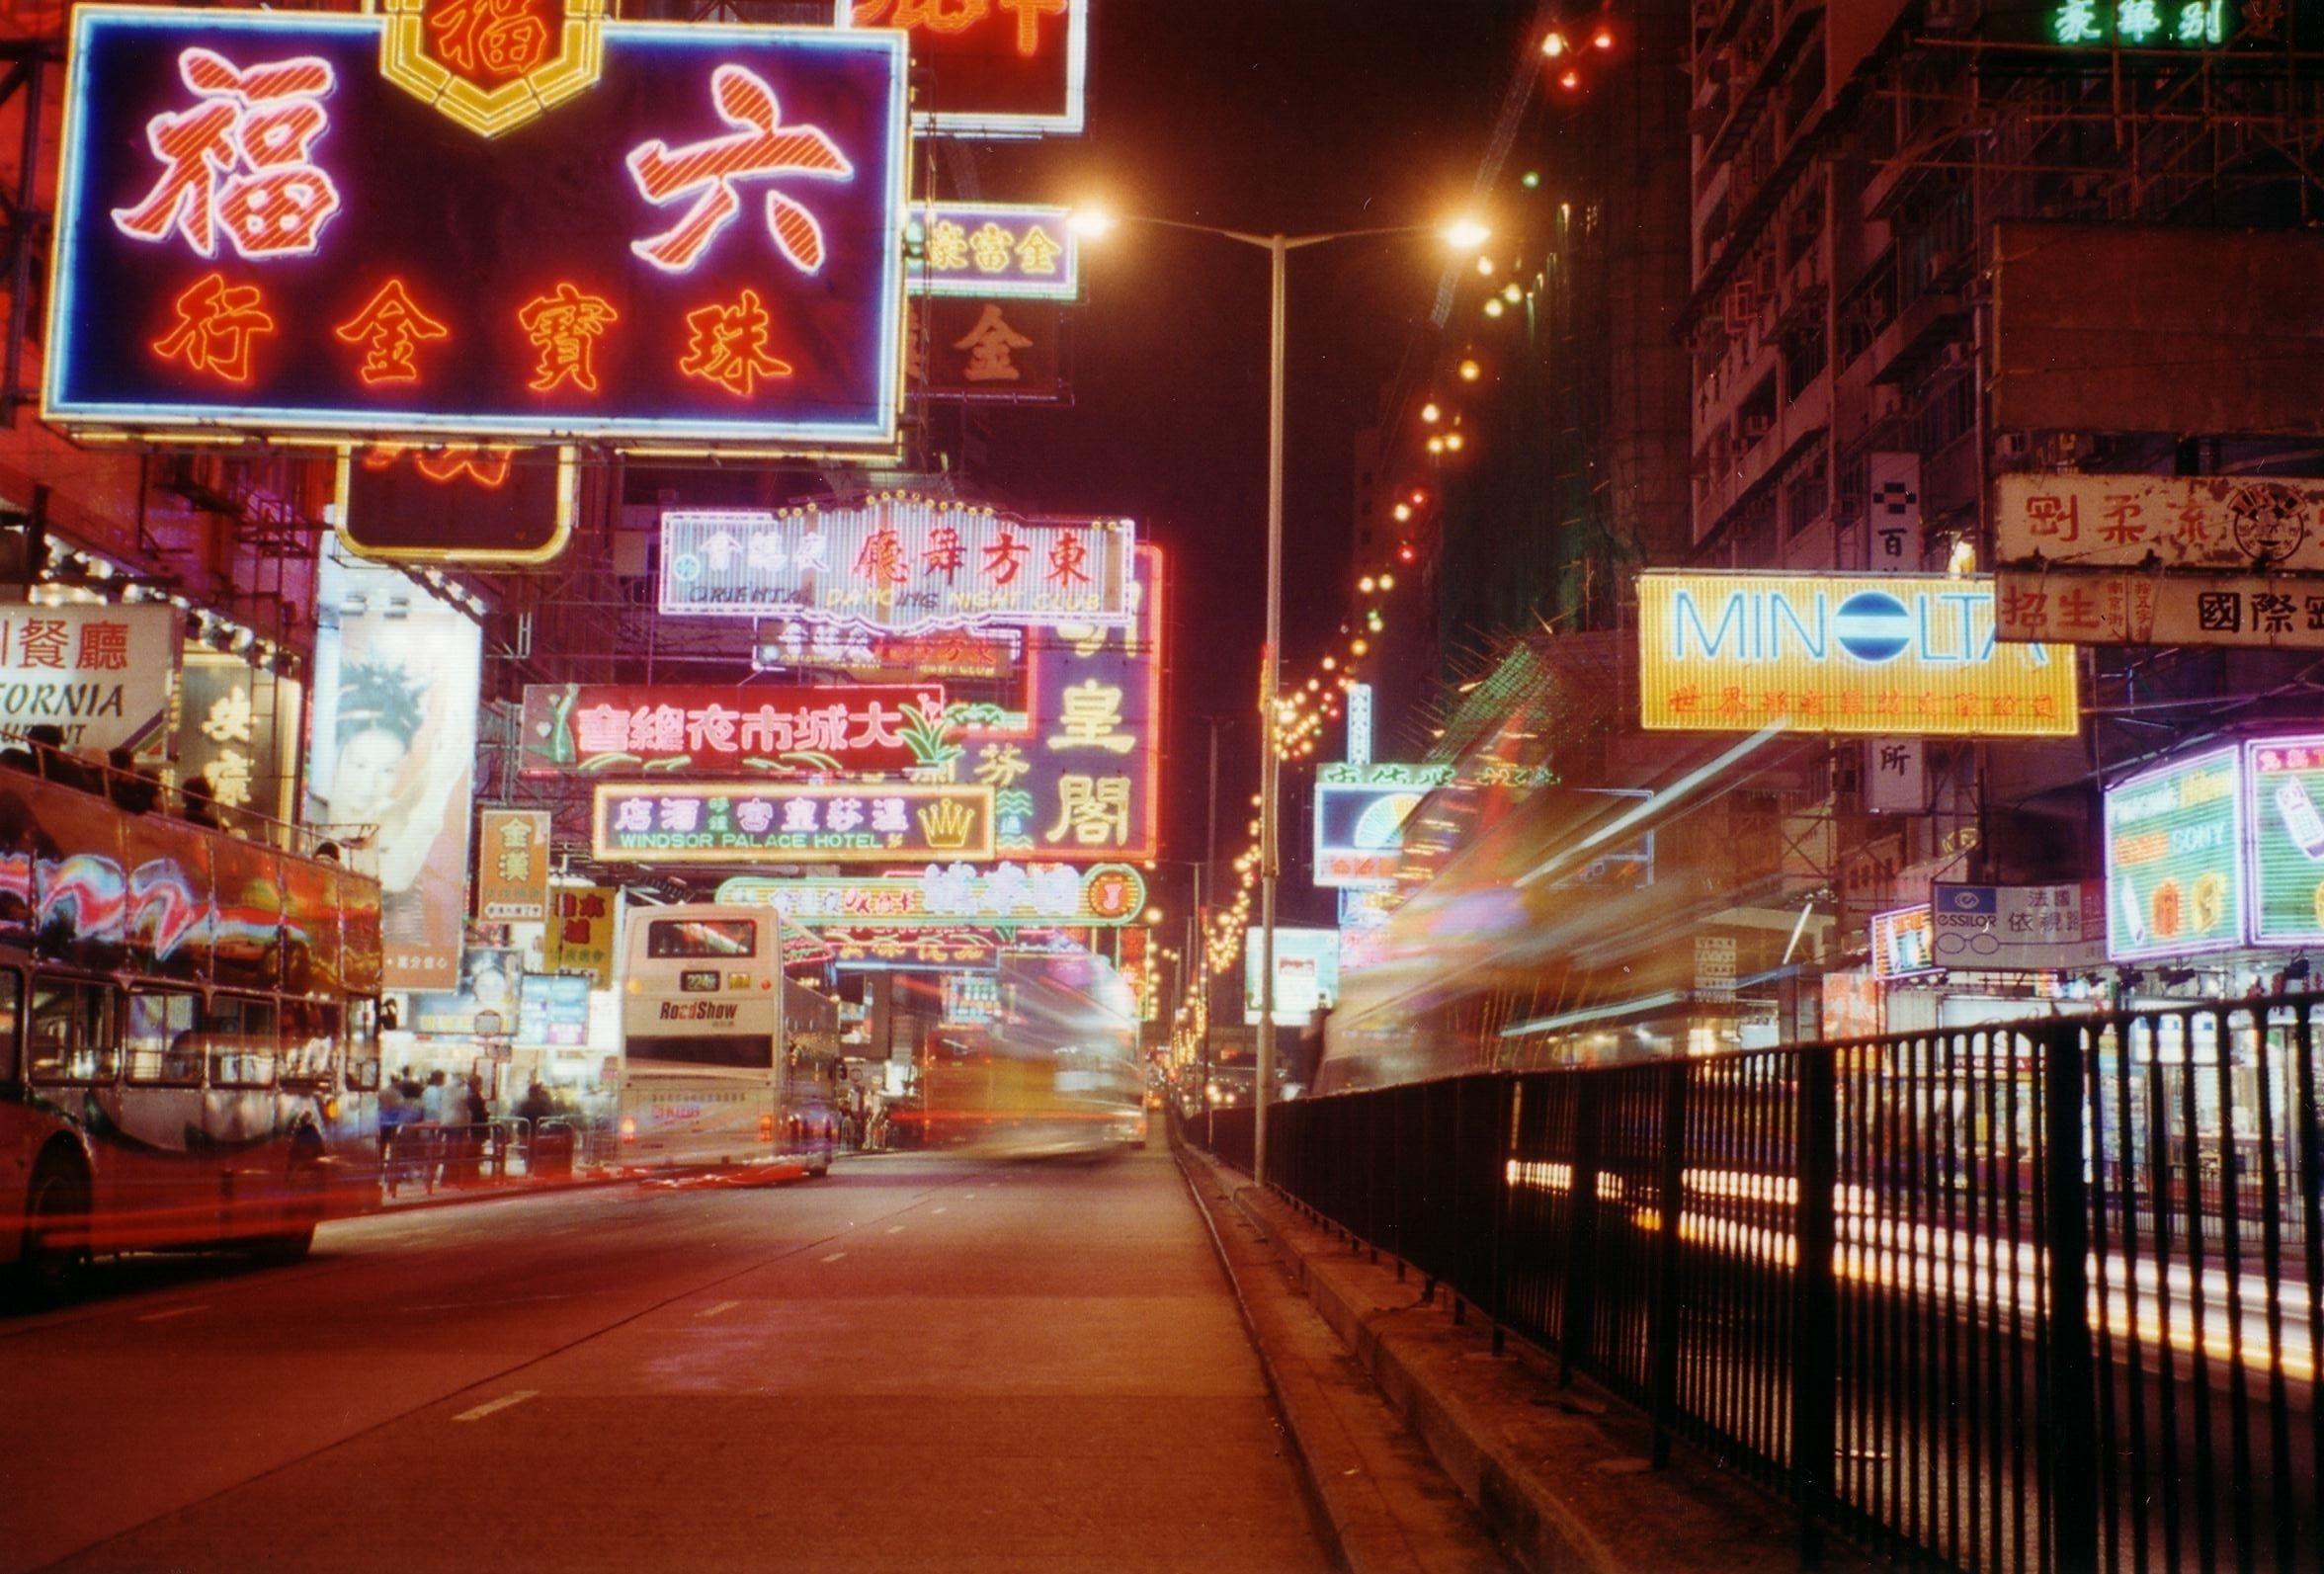 Wallpaper, night, city, lights, Chinatown, Chinese characters